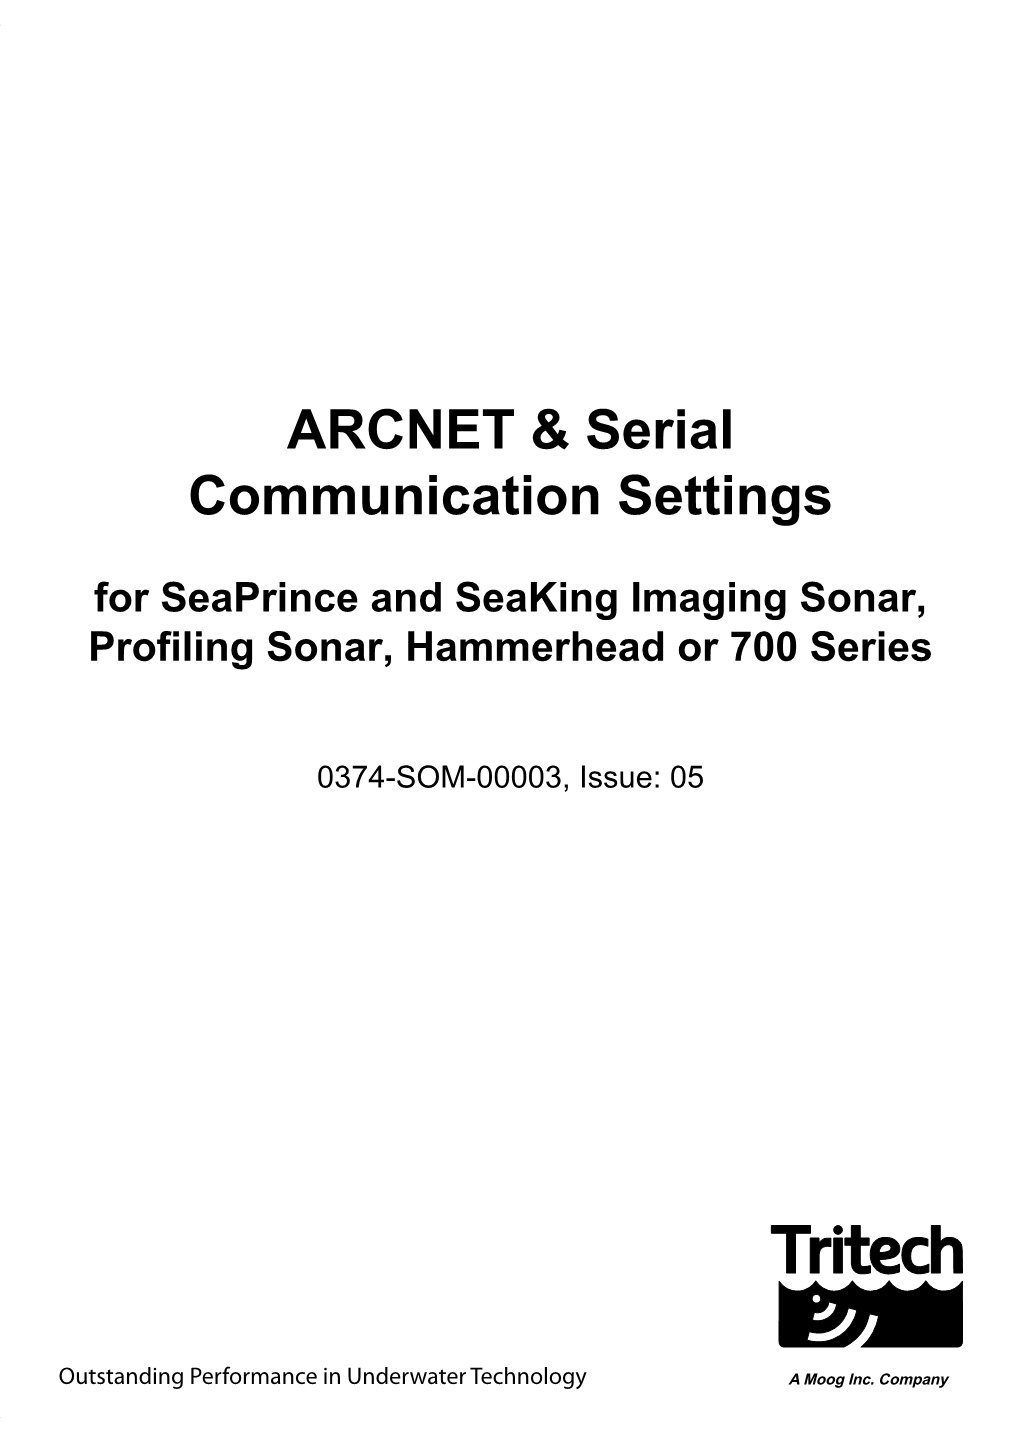 ARCNET & Serial Communication Settings